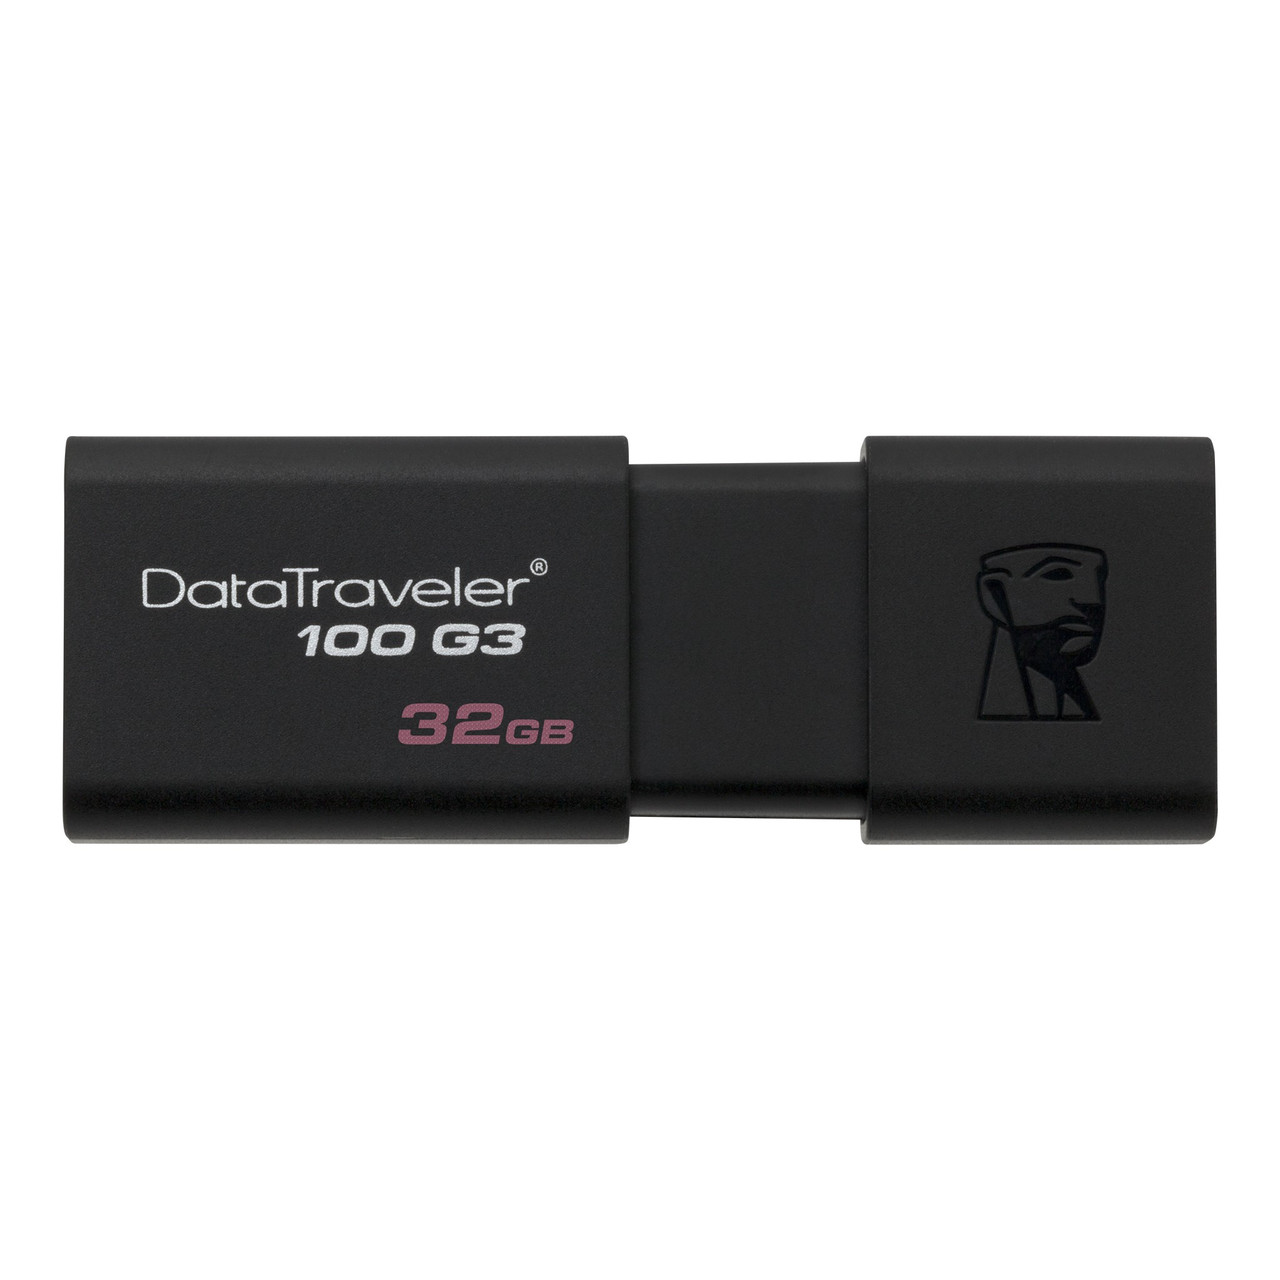 USB-накопитель Kingston DataTraveler 100 G3 32 Gb, черный